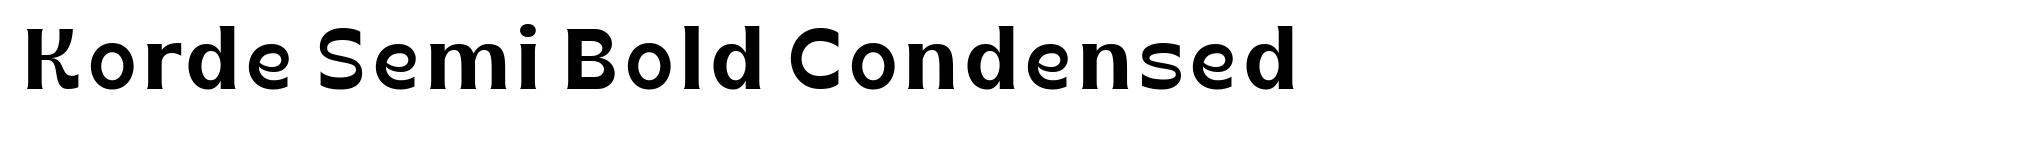 Korde Semi Bold Condensed image